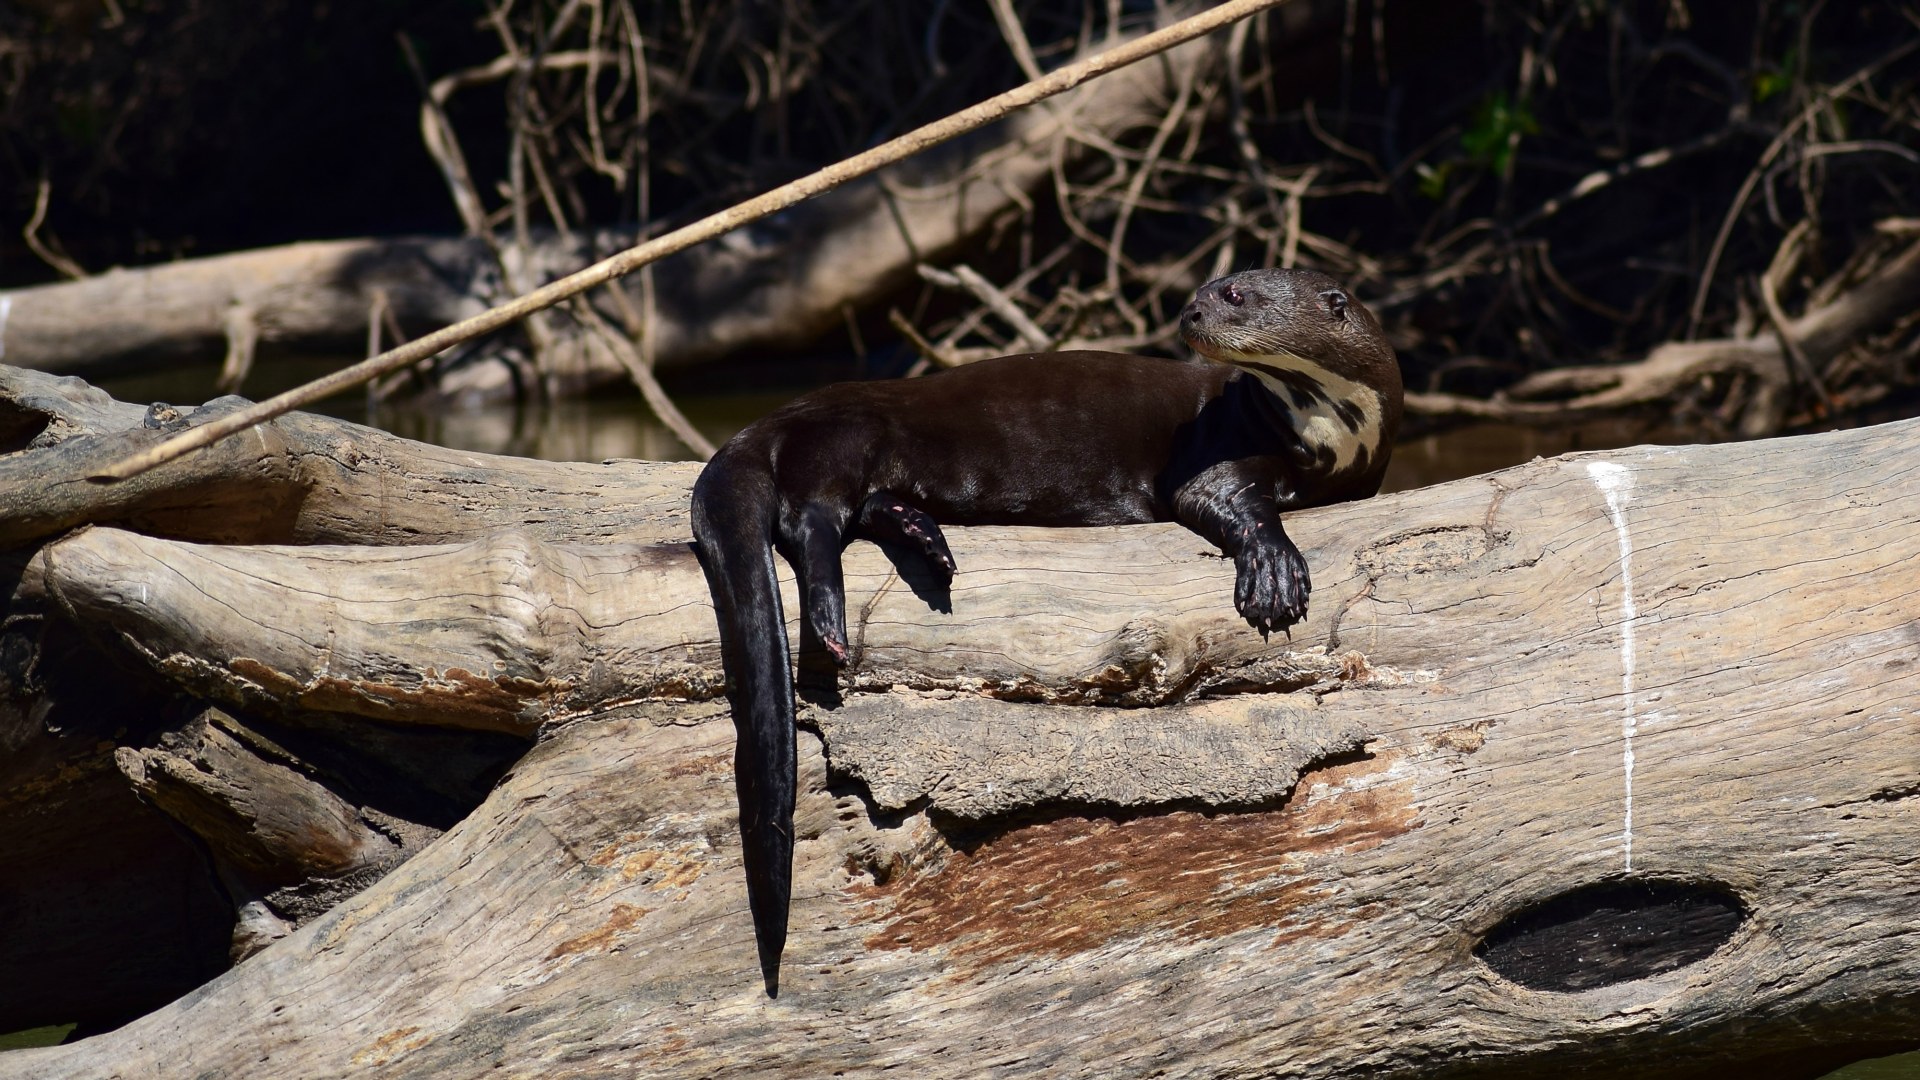 Giant Otter, Central Pantanal